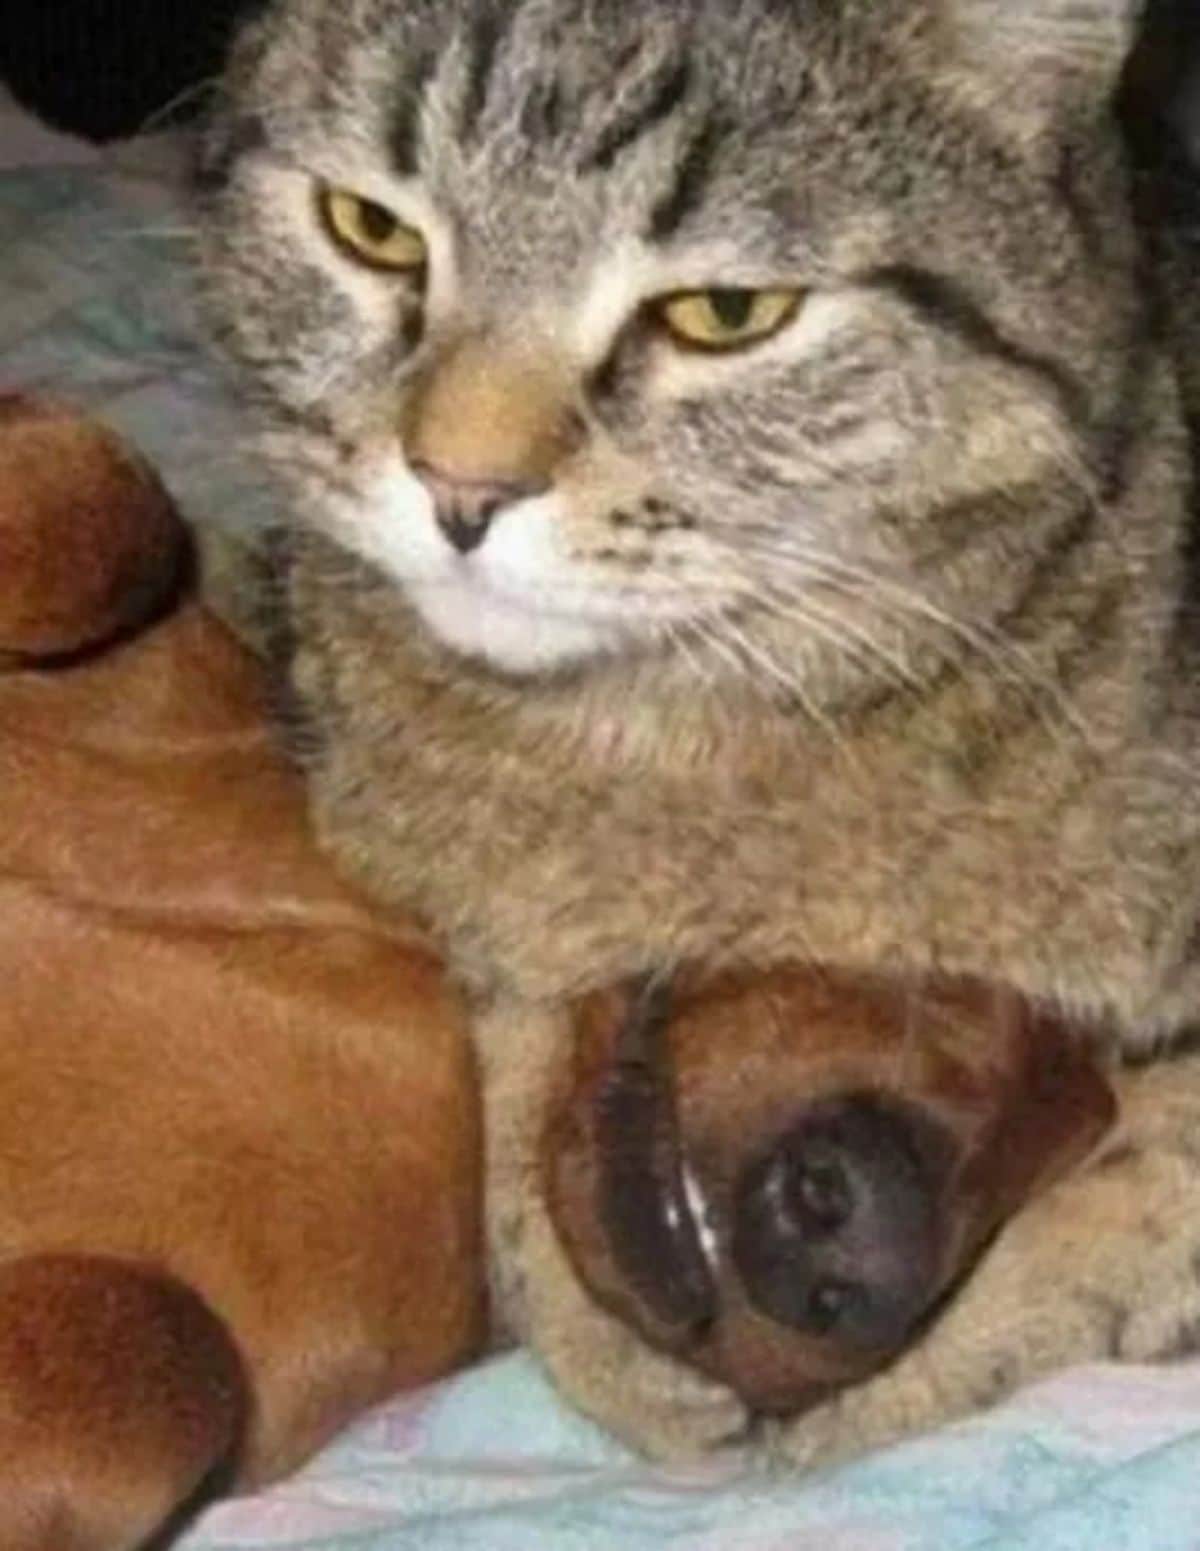 grey tabby cat sitting on a brown dog's head